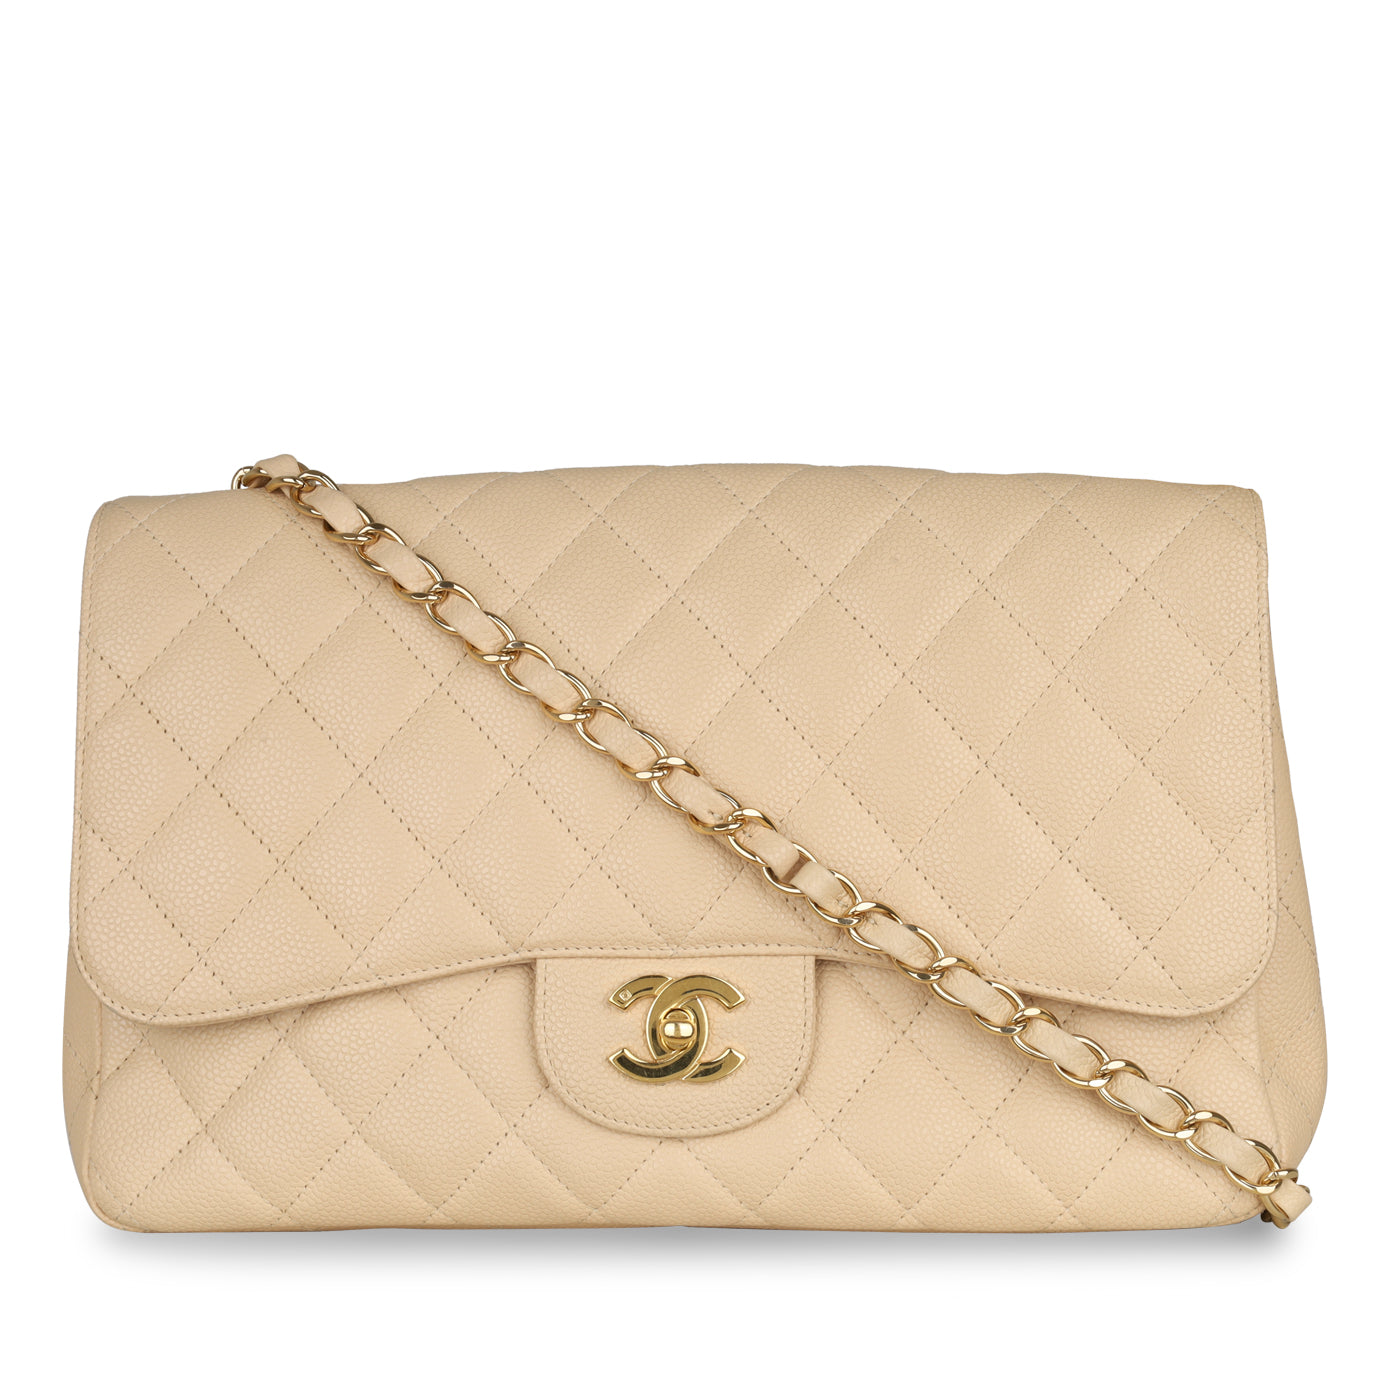 Chanel - Classic Flap Bag Jumbo - Beige Caviar Leather - Pre Loved